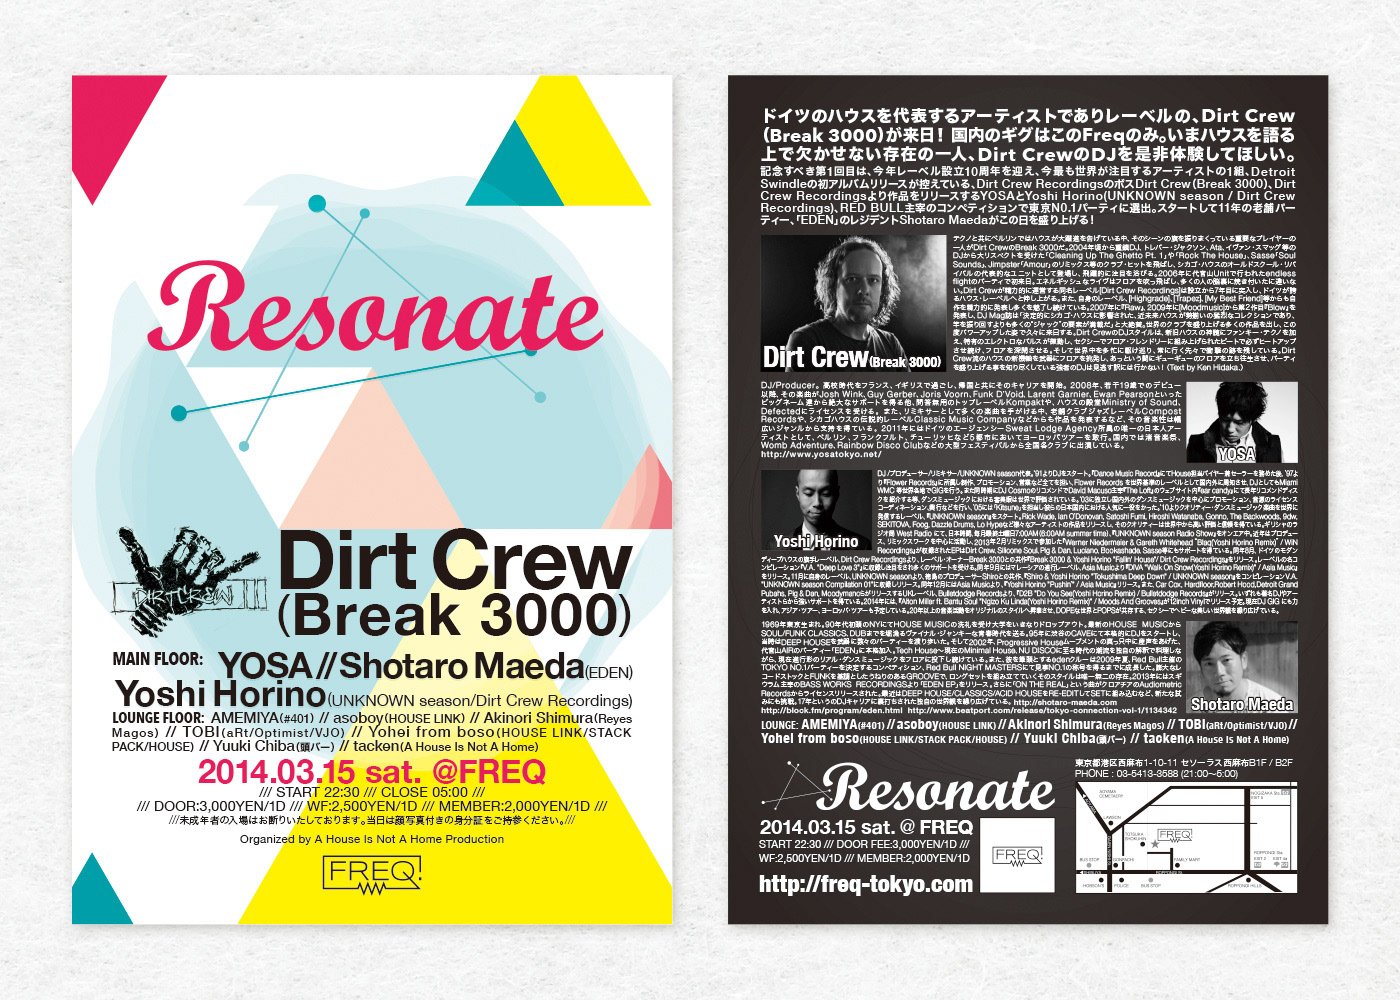 Flyer design of the dj event "Resonate".